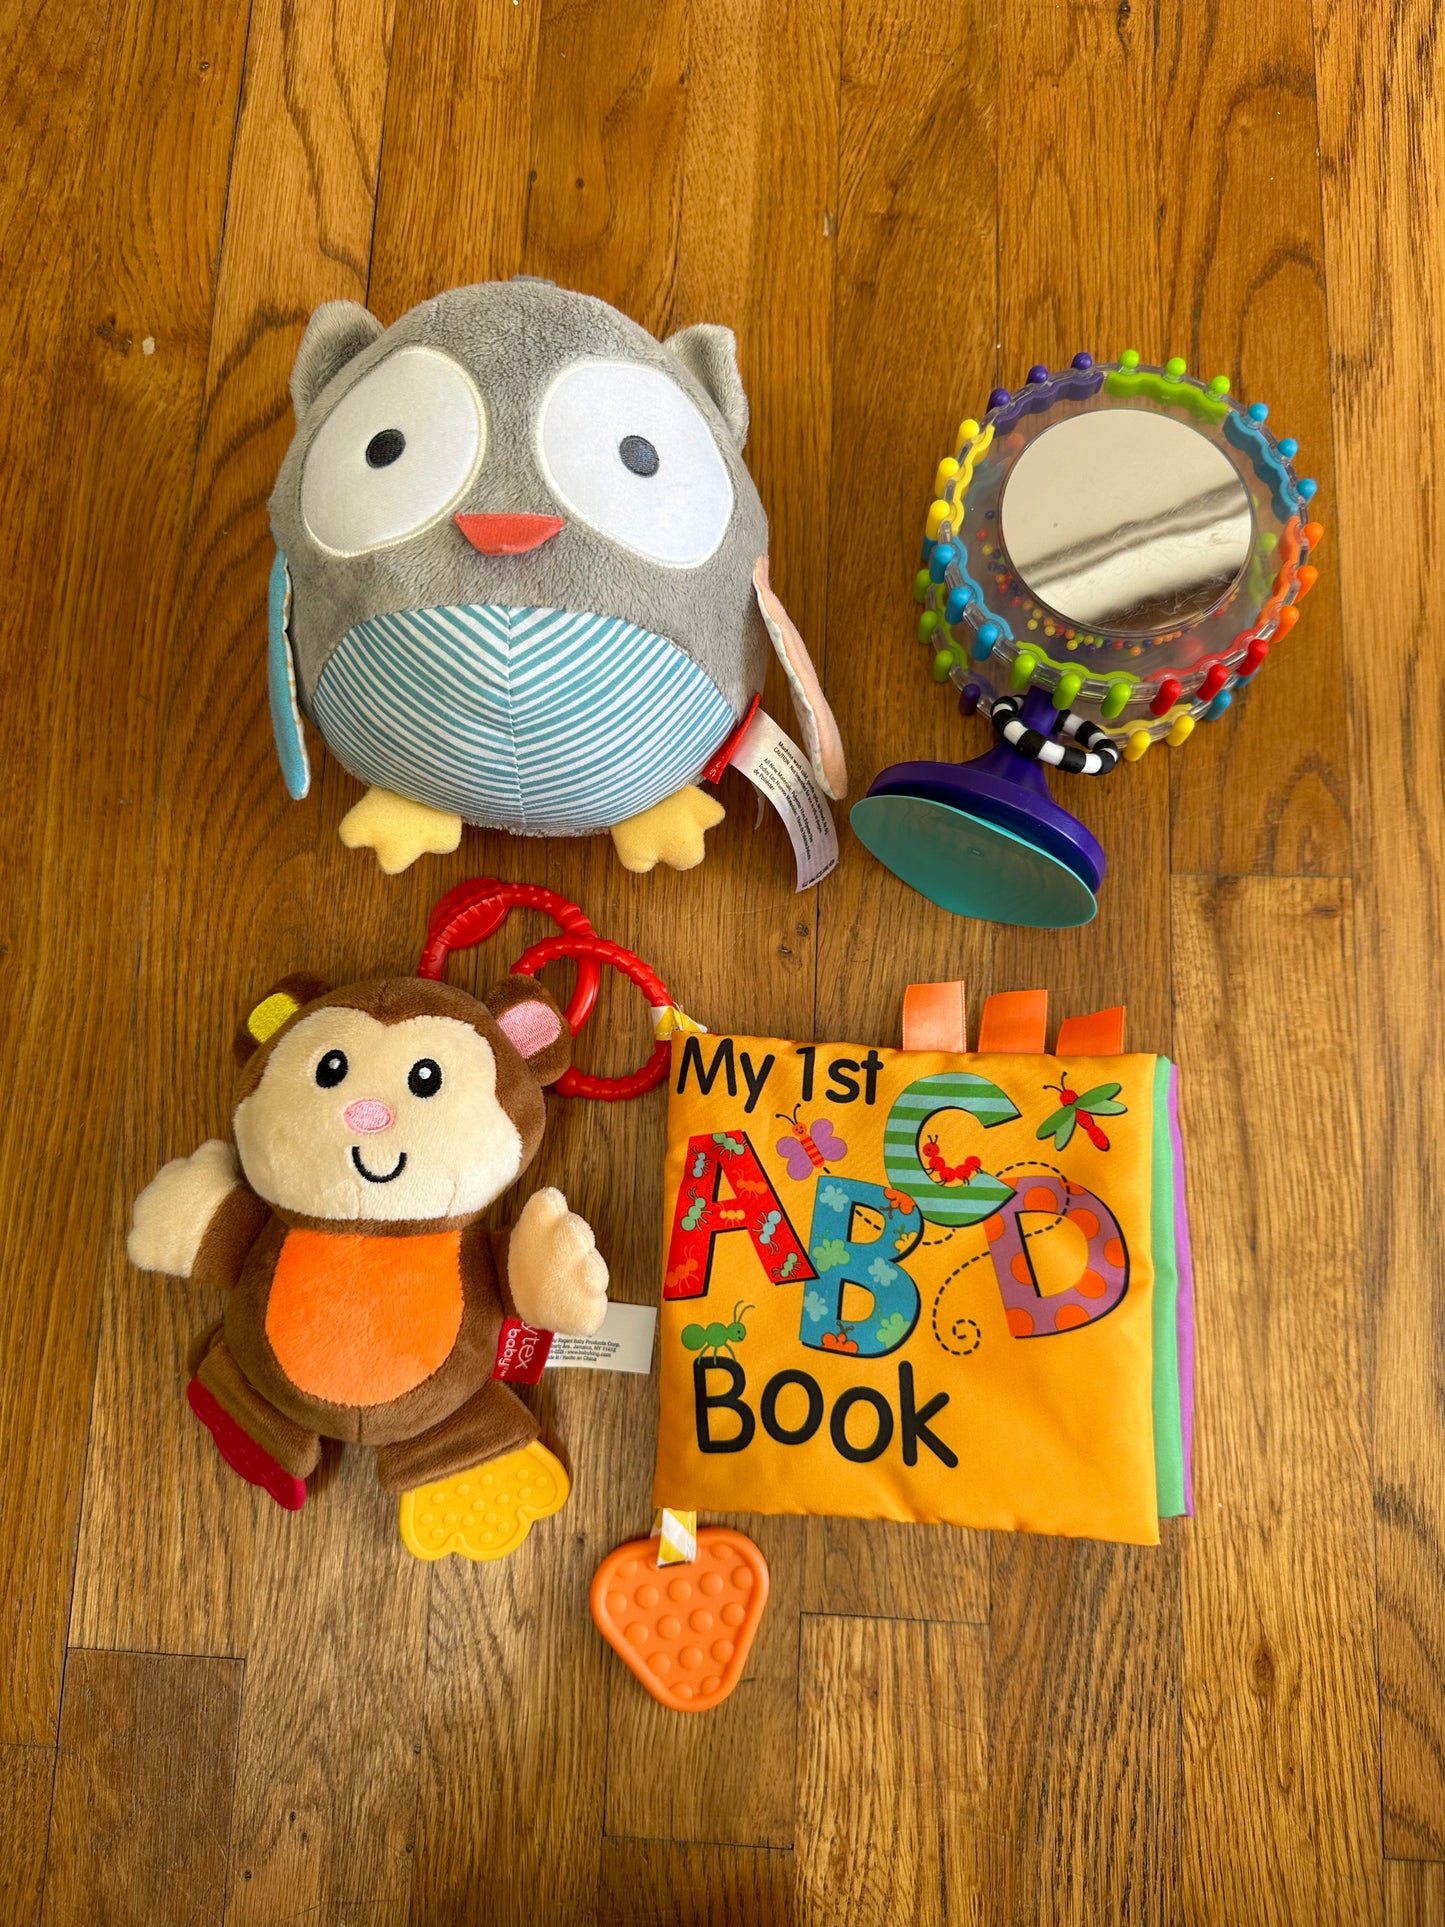 Baby Toy Bundle - Skip Hop Owl Jingle Ball, Rainbow Spin Suction Toy, Soft ABC book + Monkey Toy